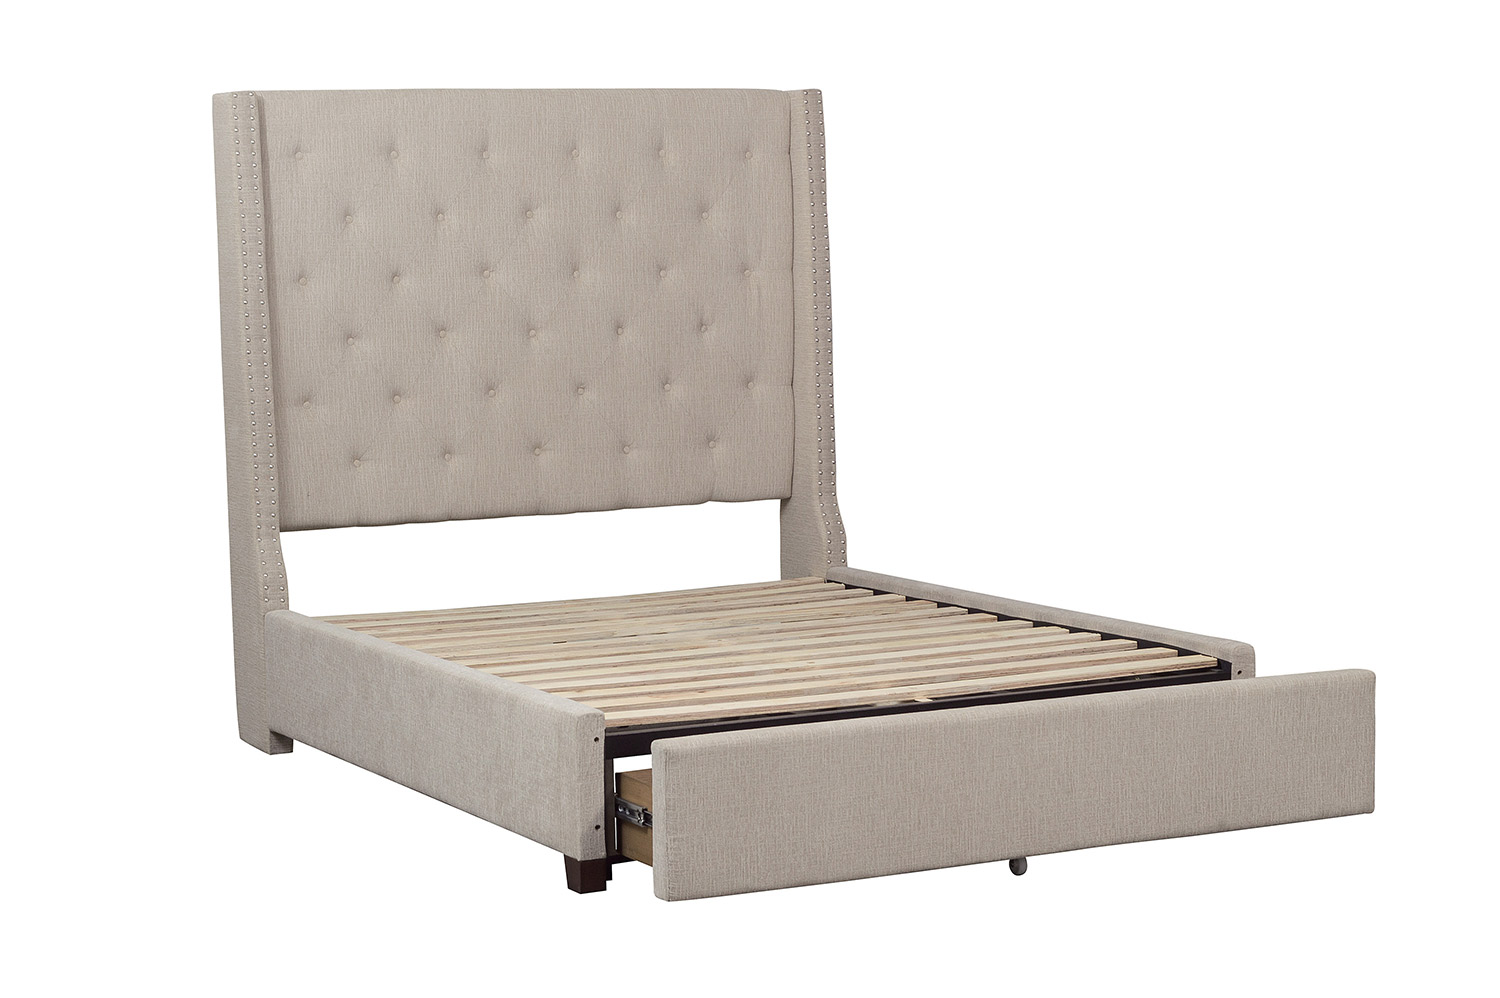 Homelegance Fairborn Platform Storage Bed - Beige